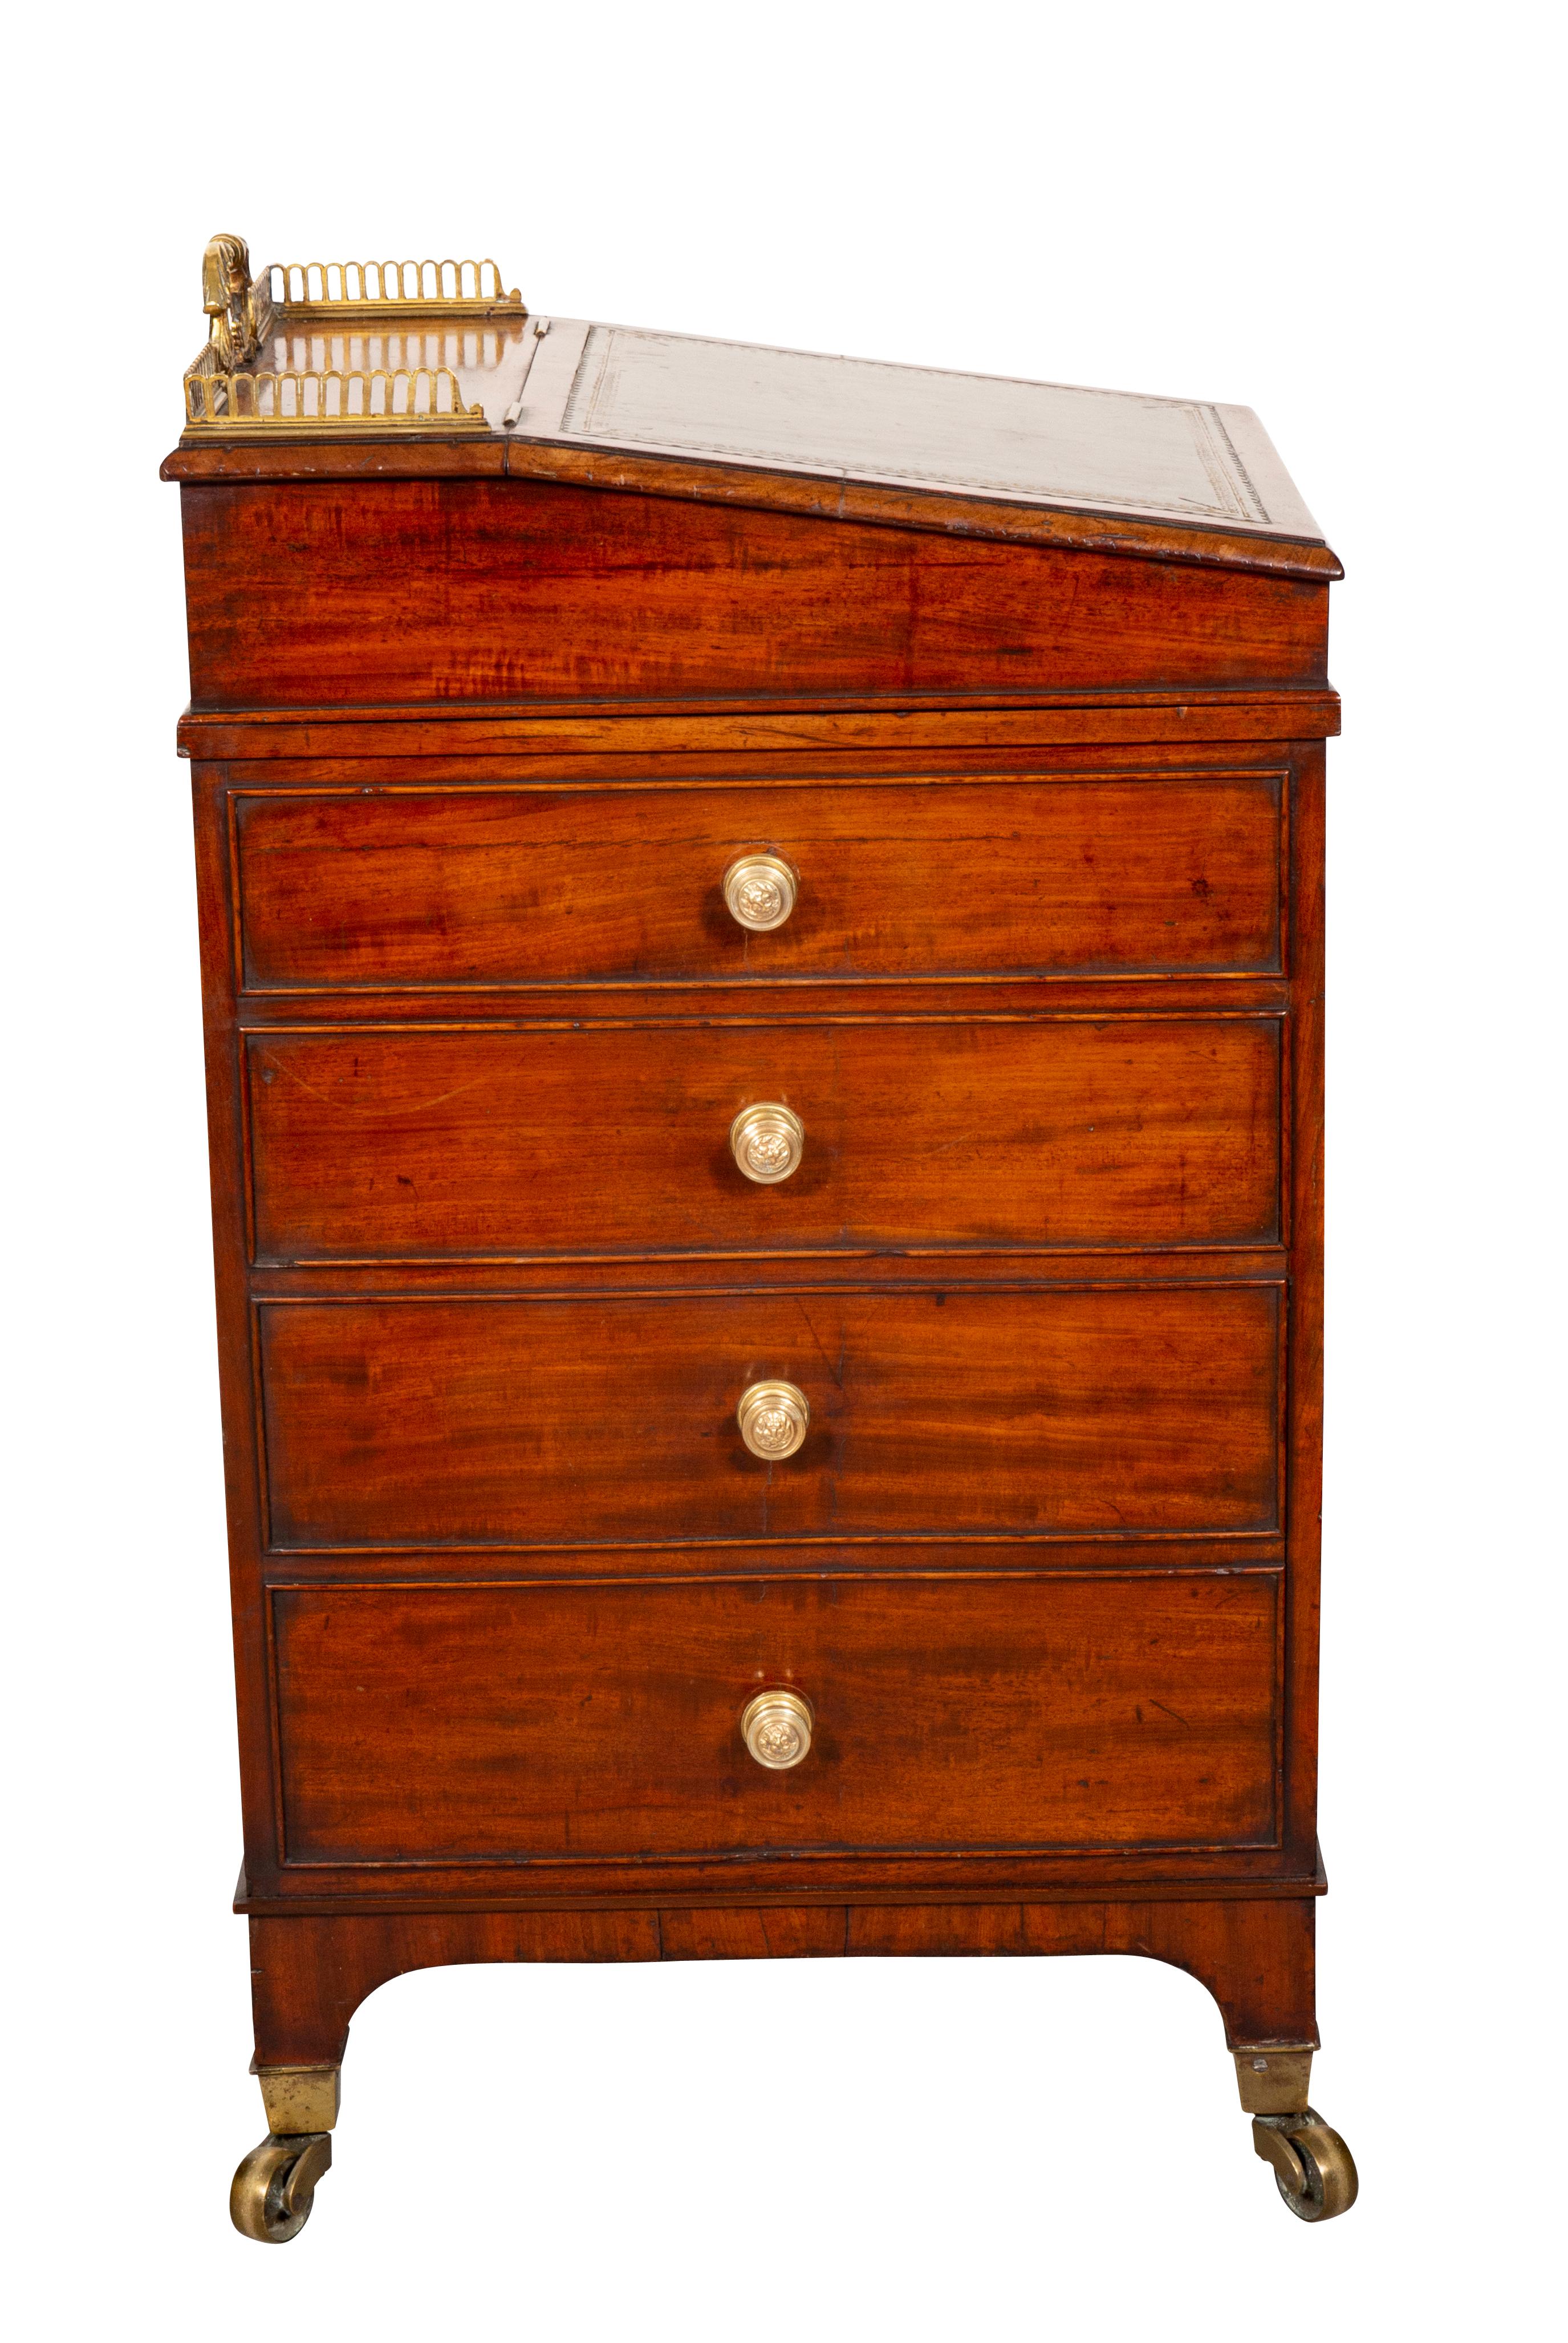 English Regency Mahogany Davenport Desk of Diminutive Size For Sale